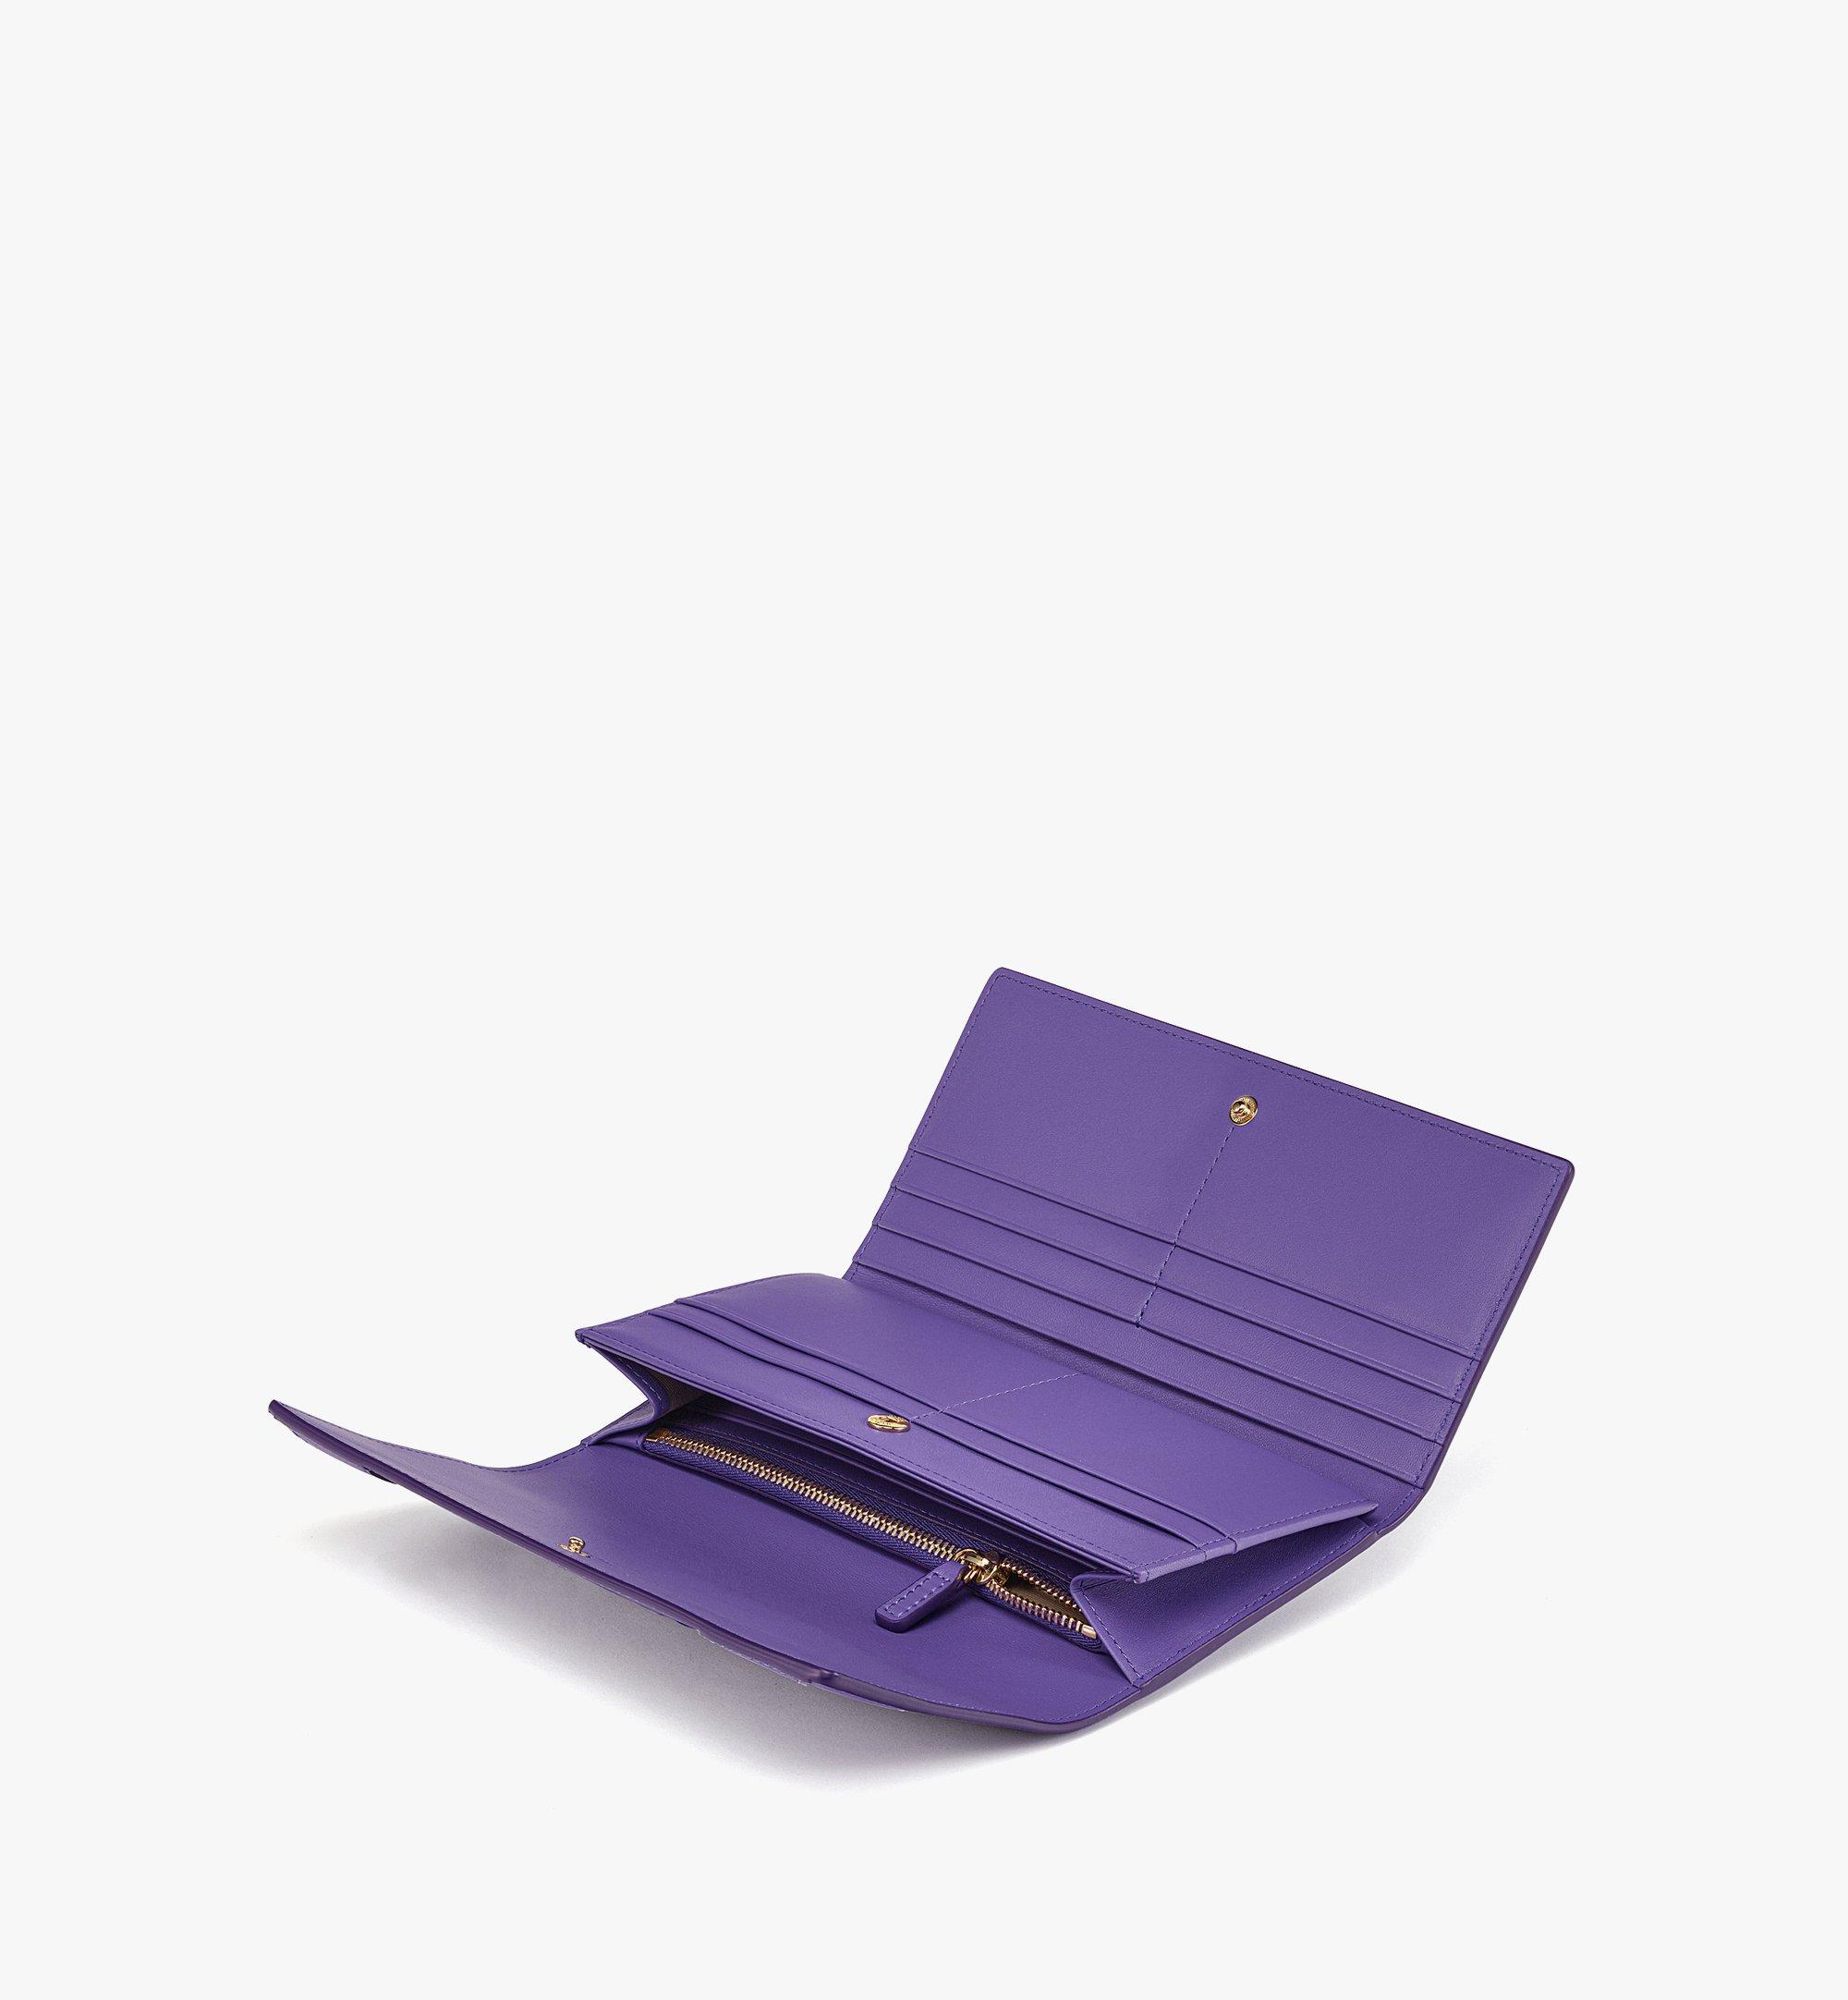 MCM Aren Continental Wallet in Spanish Calf Leather Purple MYLDATA03UQ001 Alternate View 1